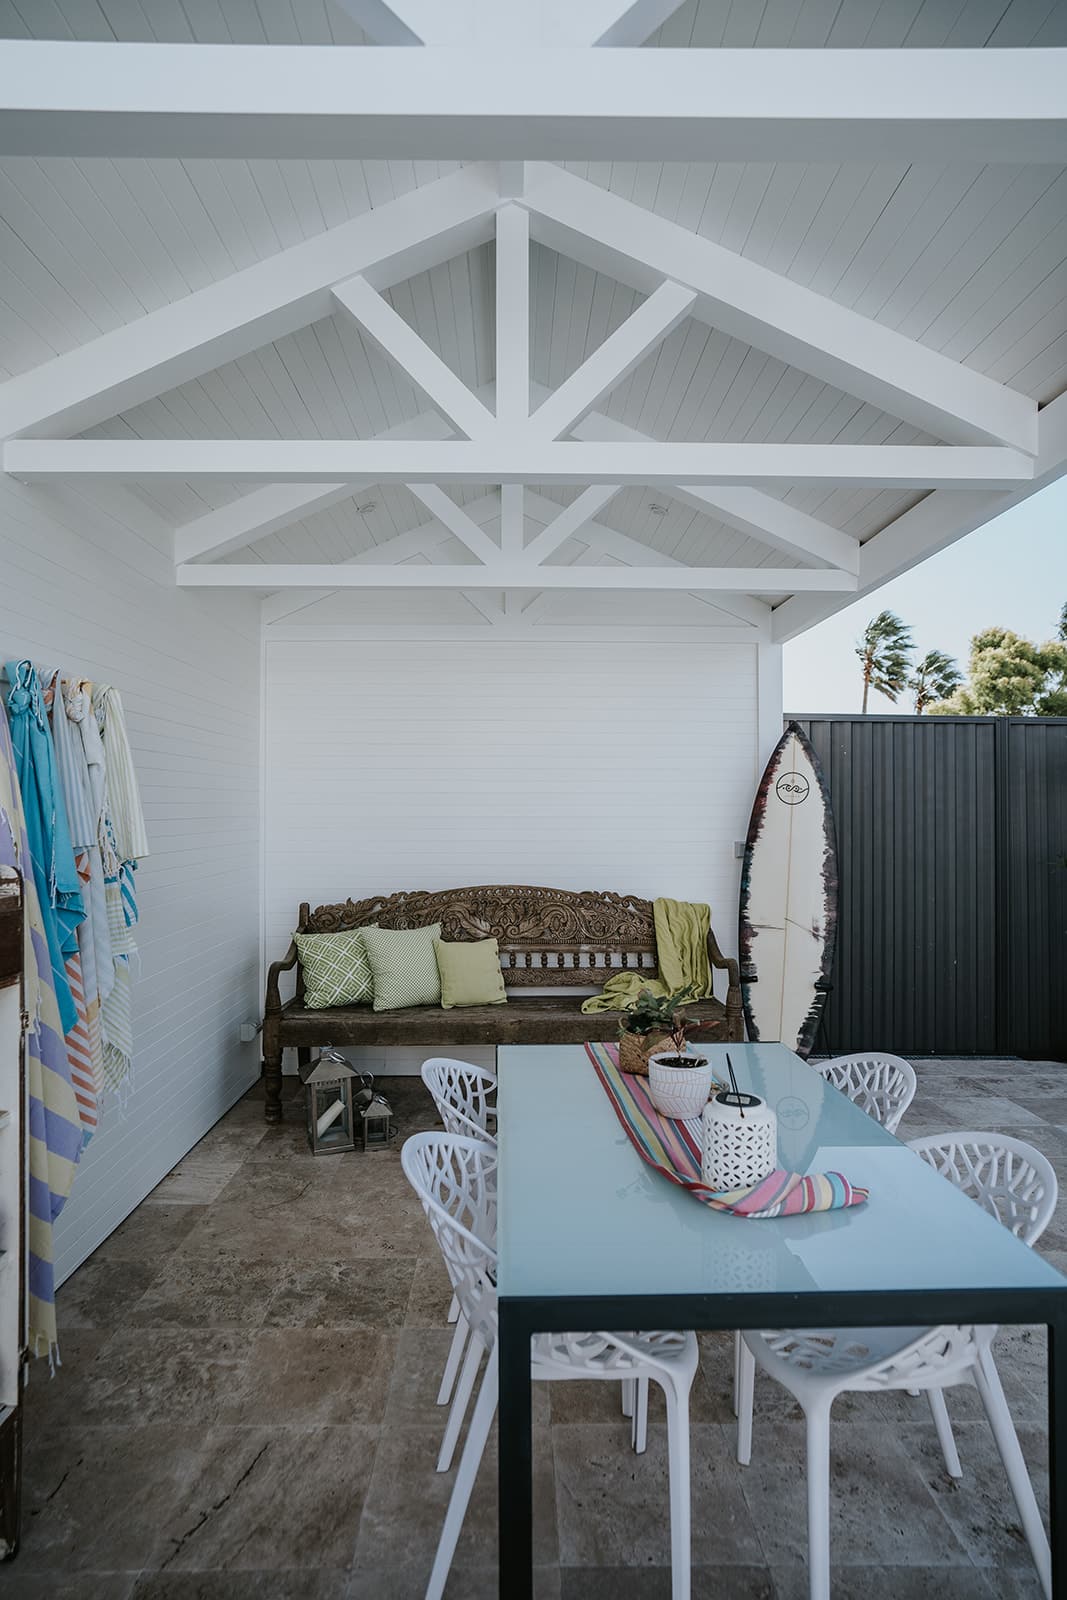 Coastal hamptons style poolhouse cabana